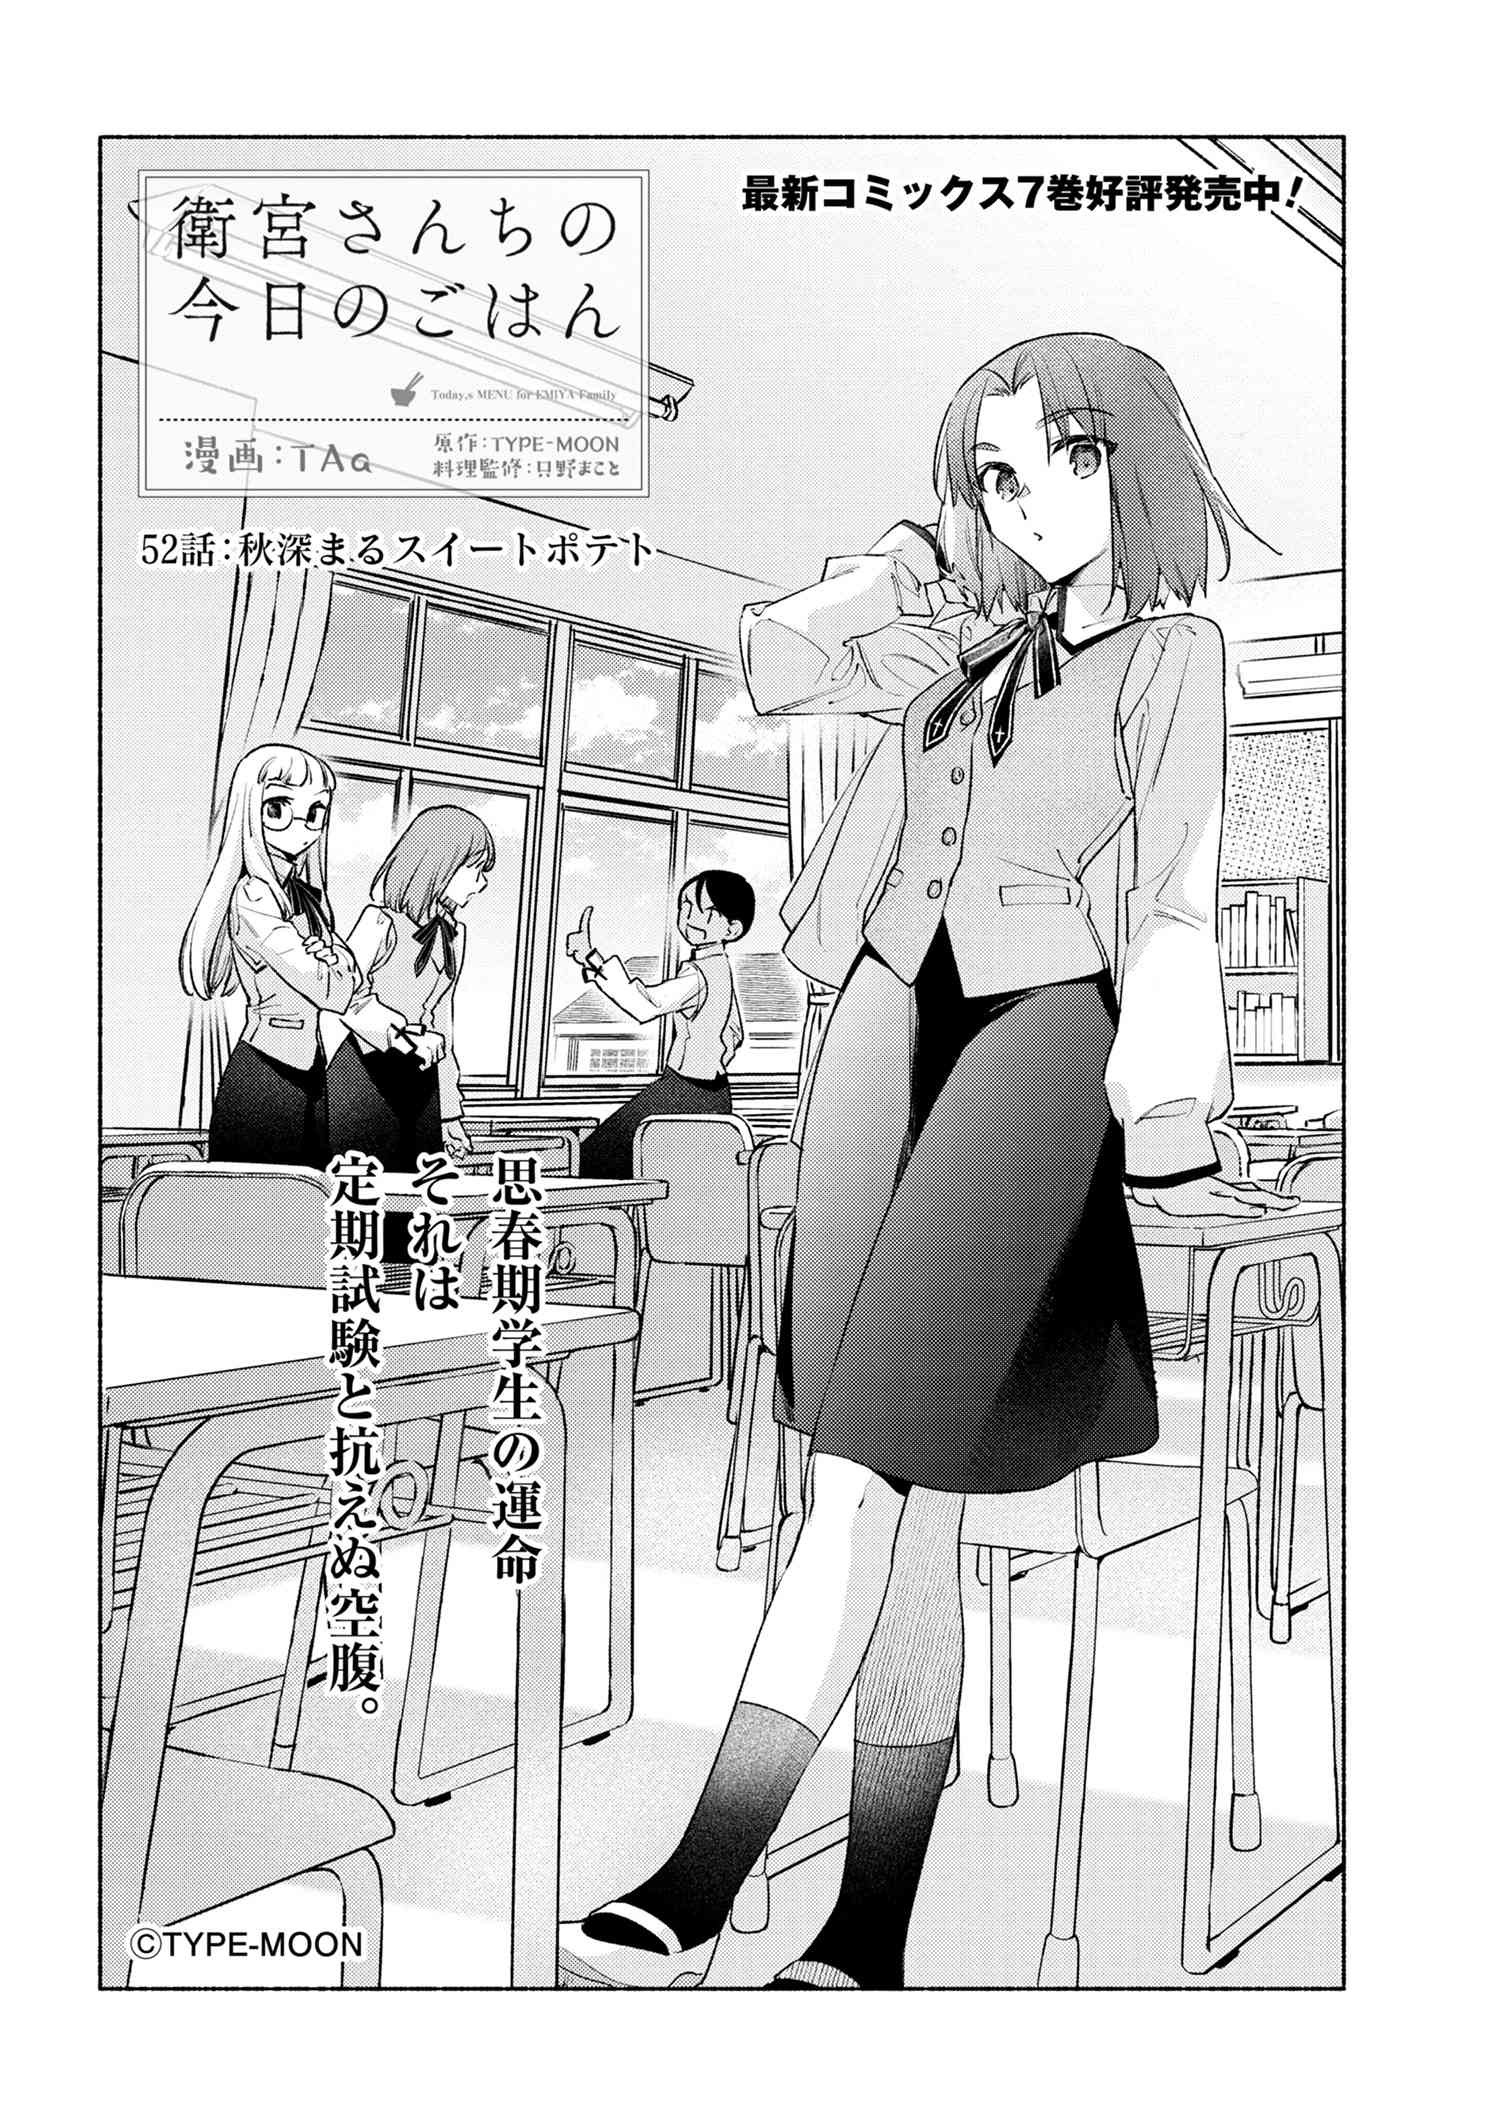 Emiya-san Chi no Kyou no Gohan - Chapter 52 - Page 2